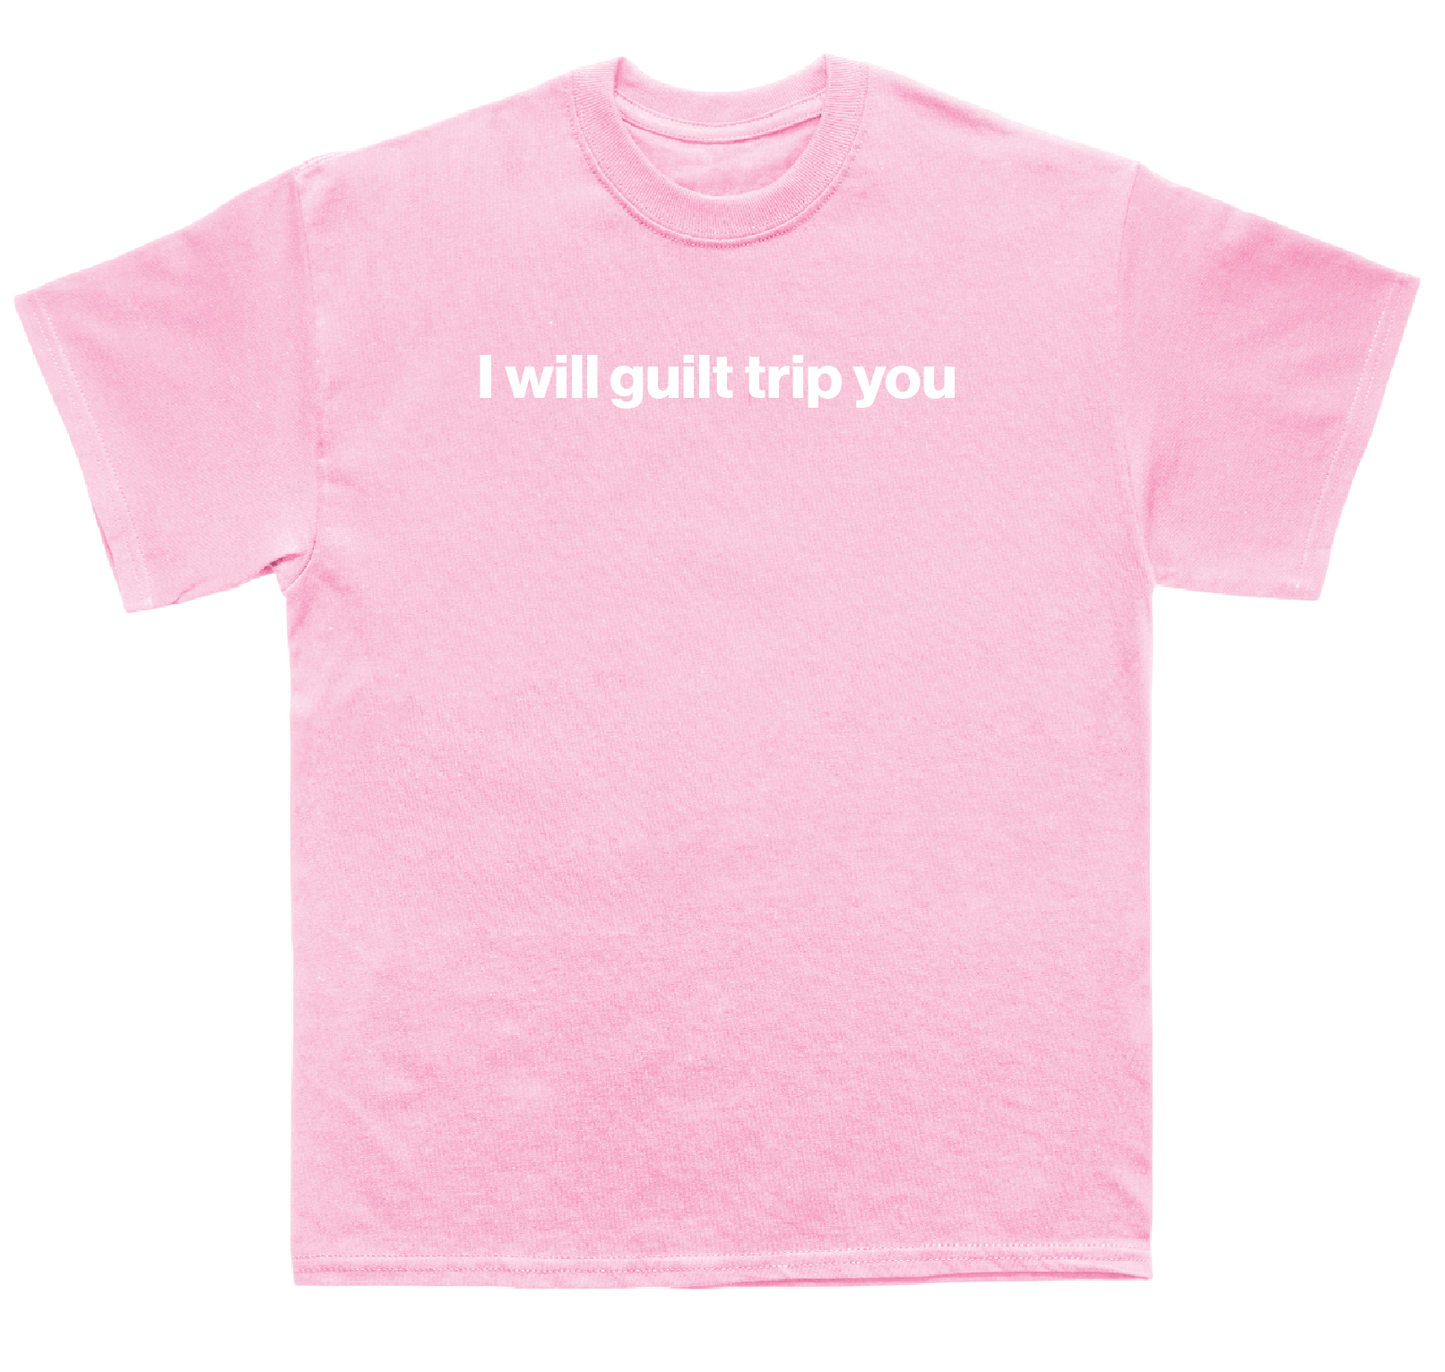 I will guilt trip you shirt